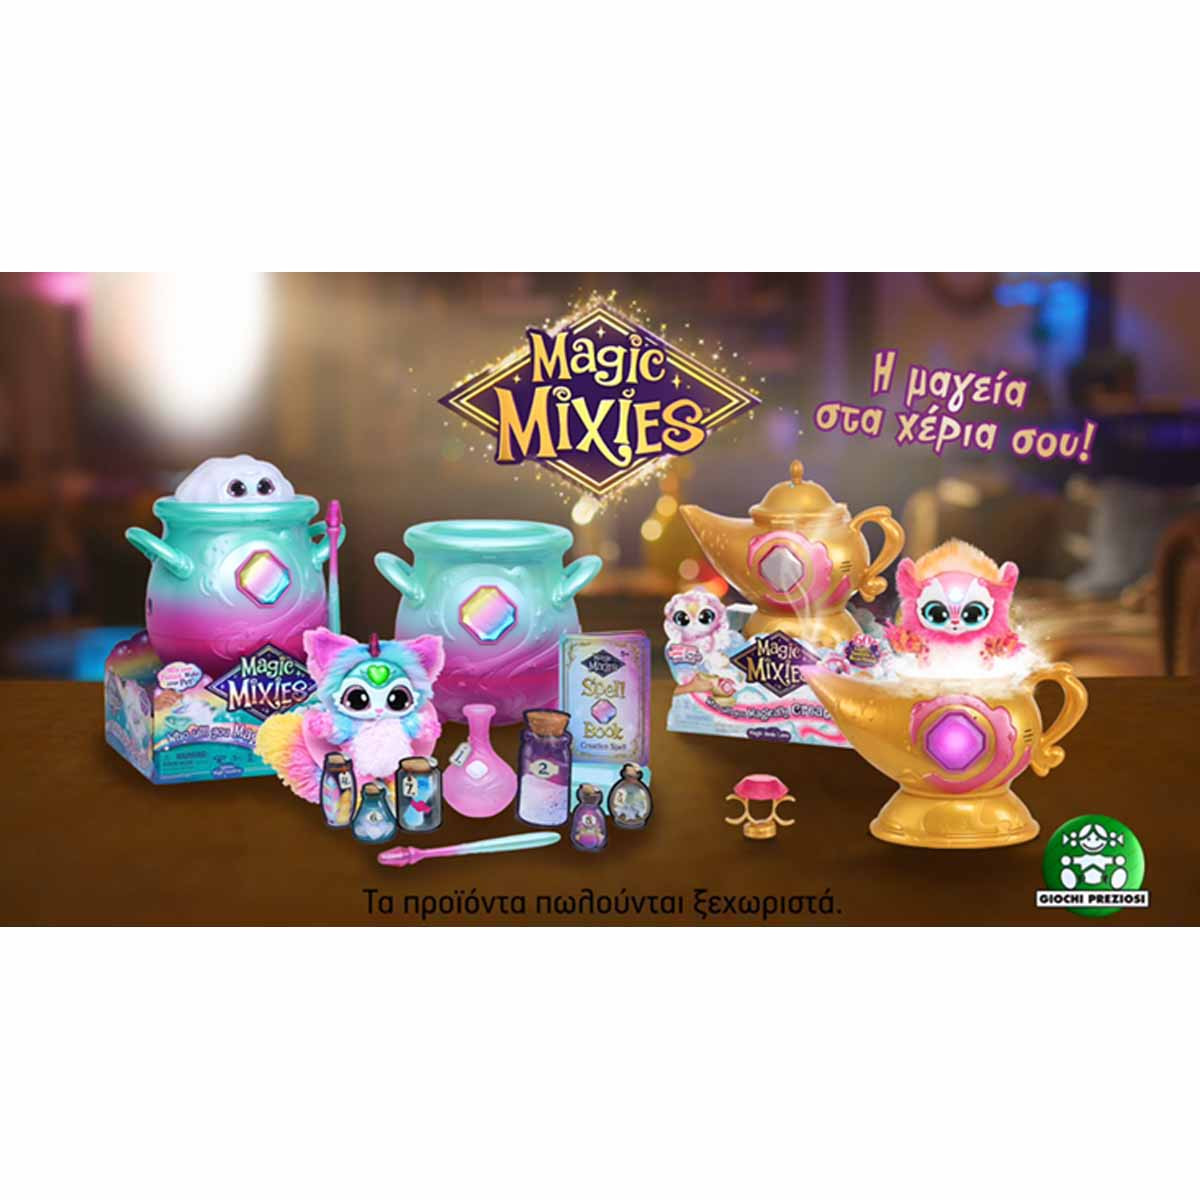 Magic Mixies Magic Genie Lamp Toy, Ages 5+